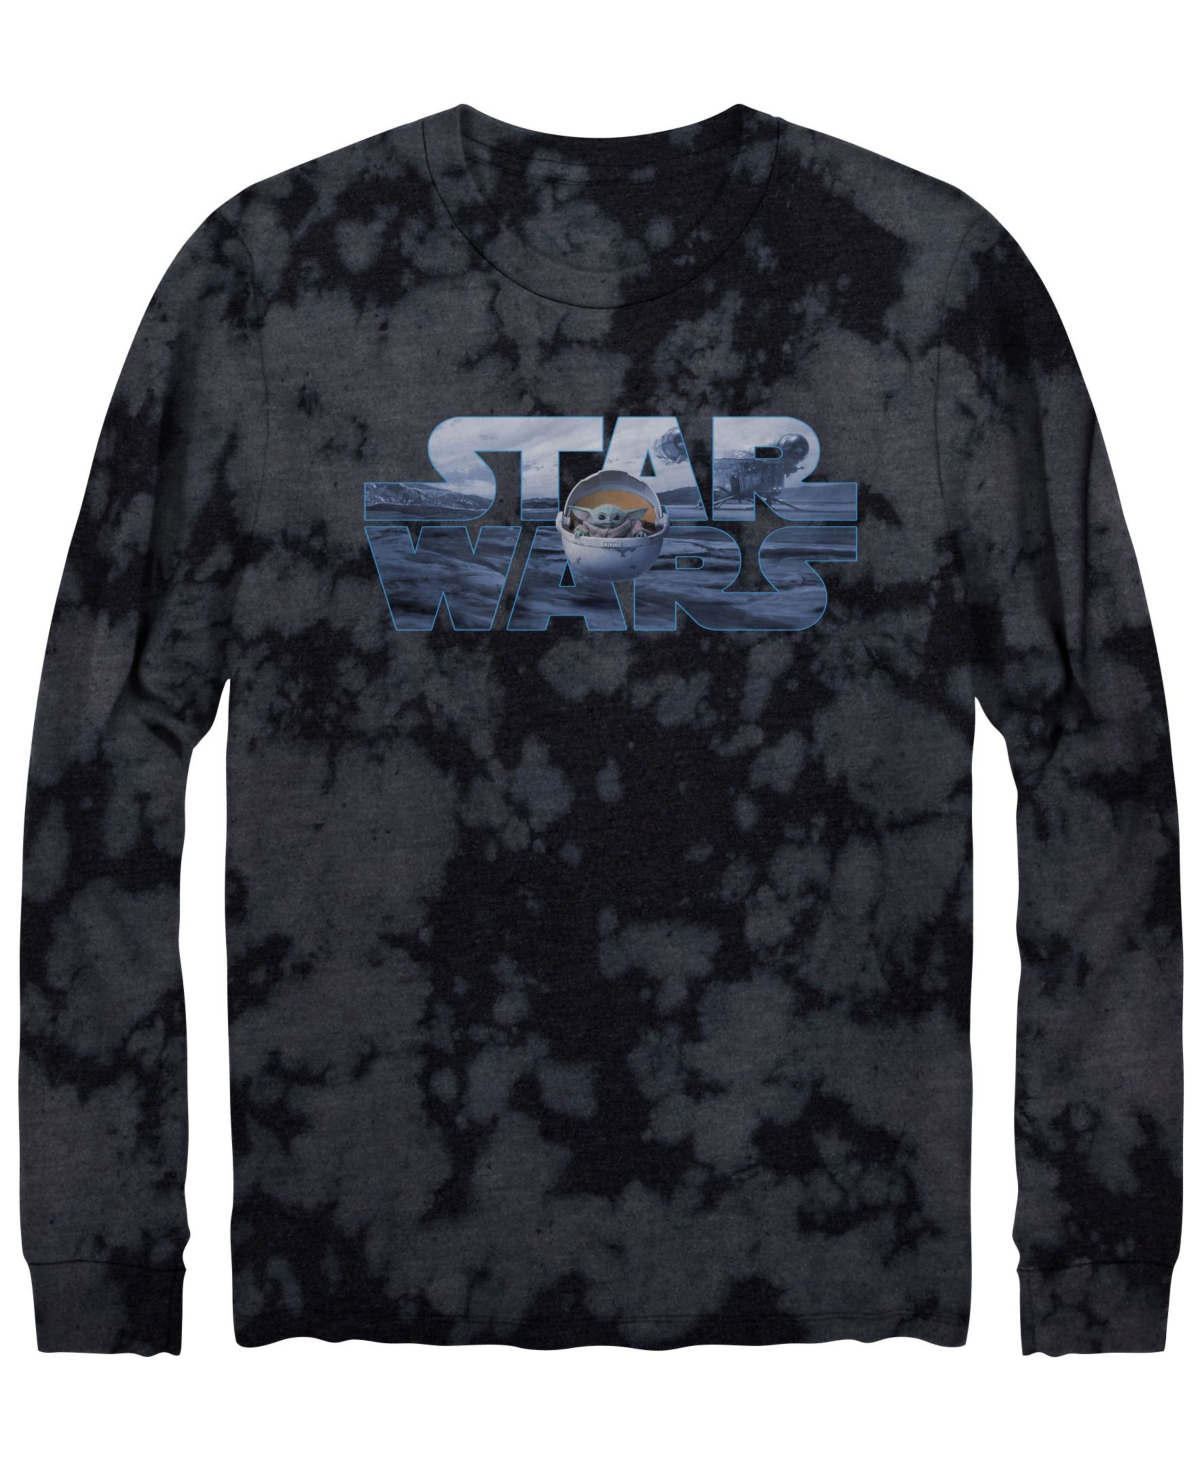 Hybrid Apparel Men's Star Wars Child Logo Long Sleeve Graphic T-shirt